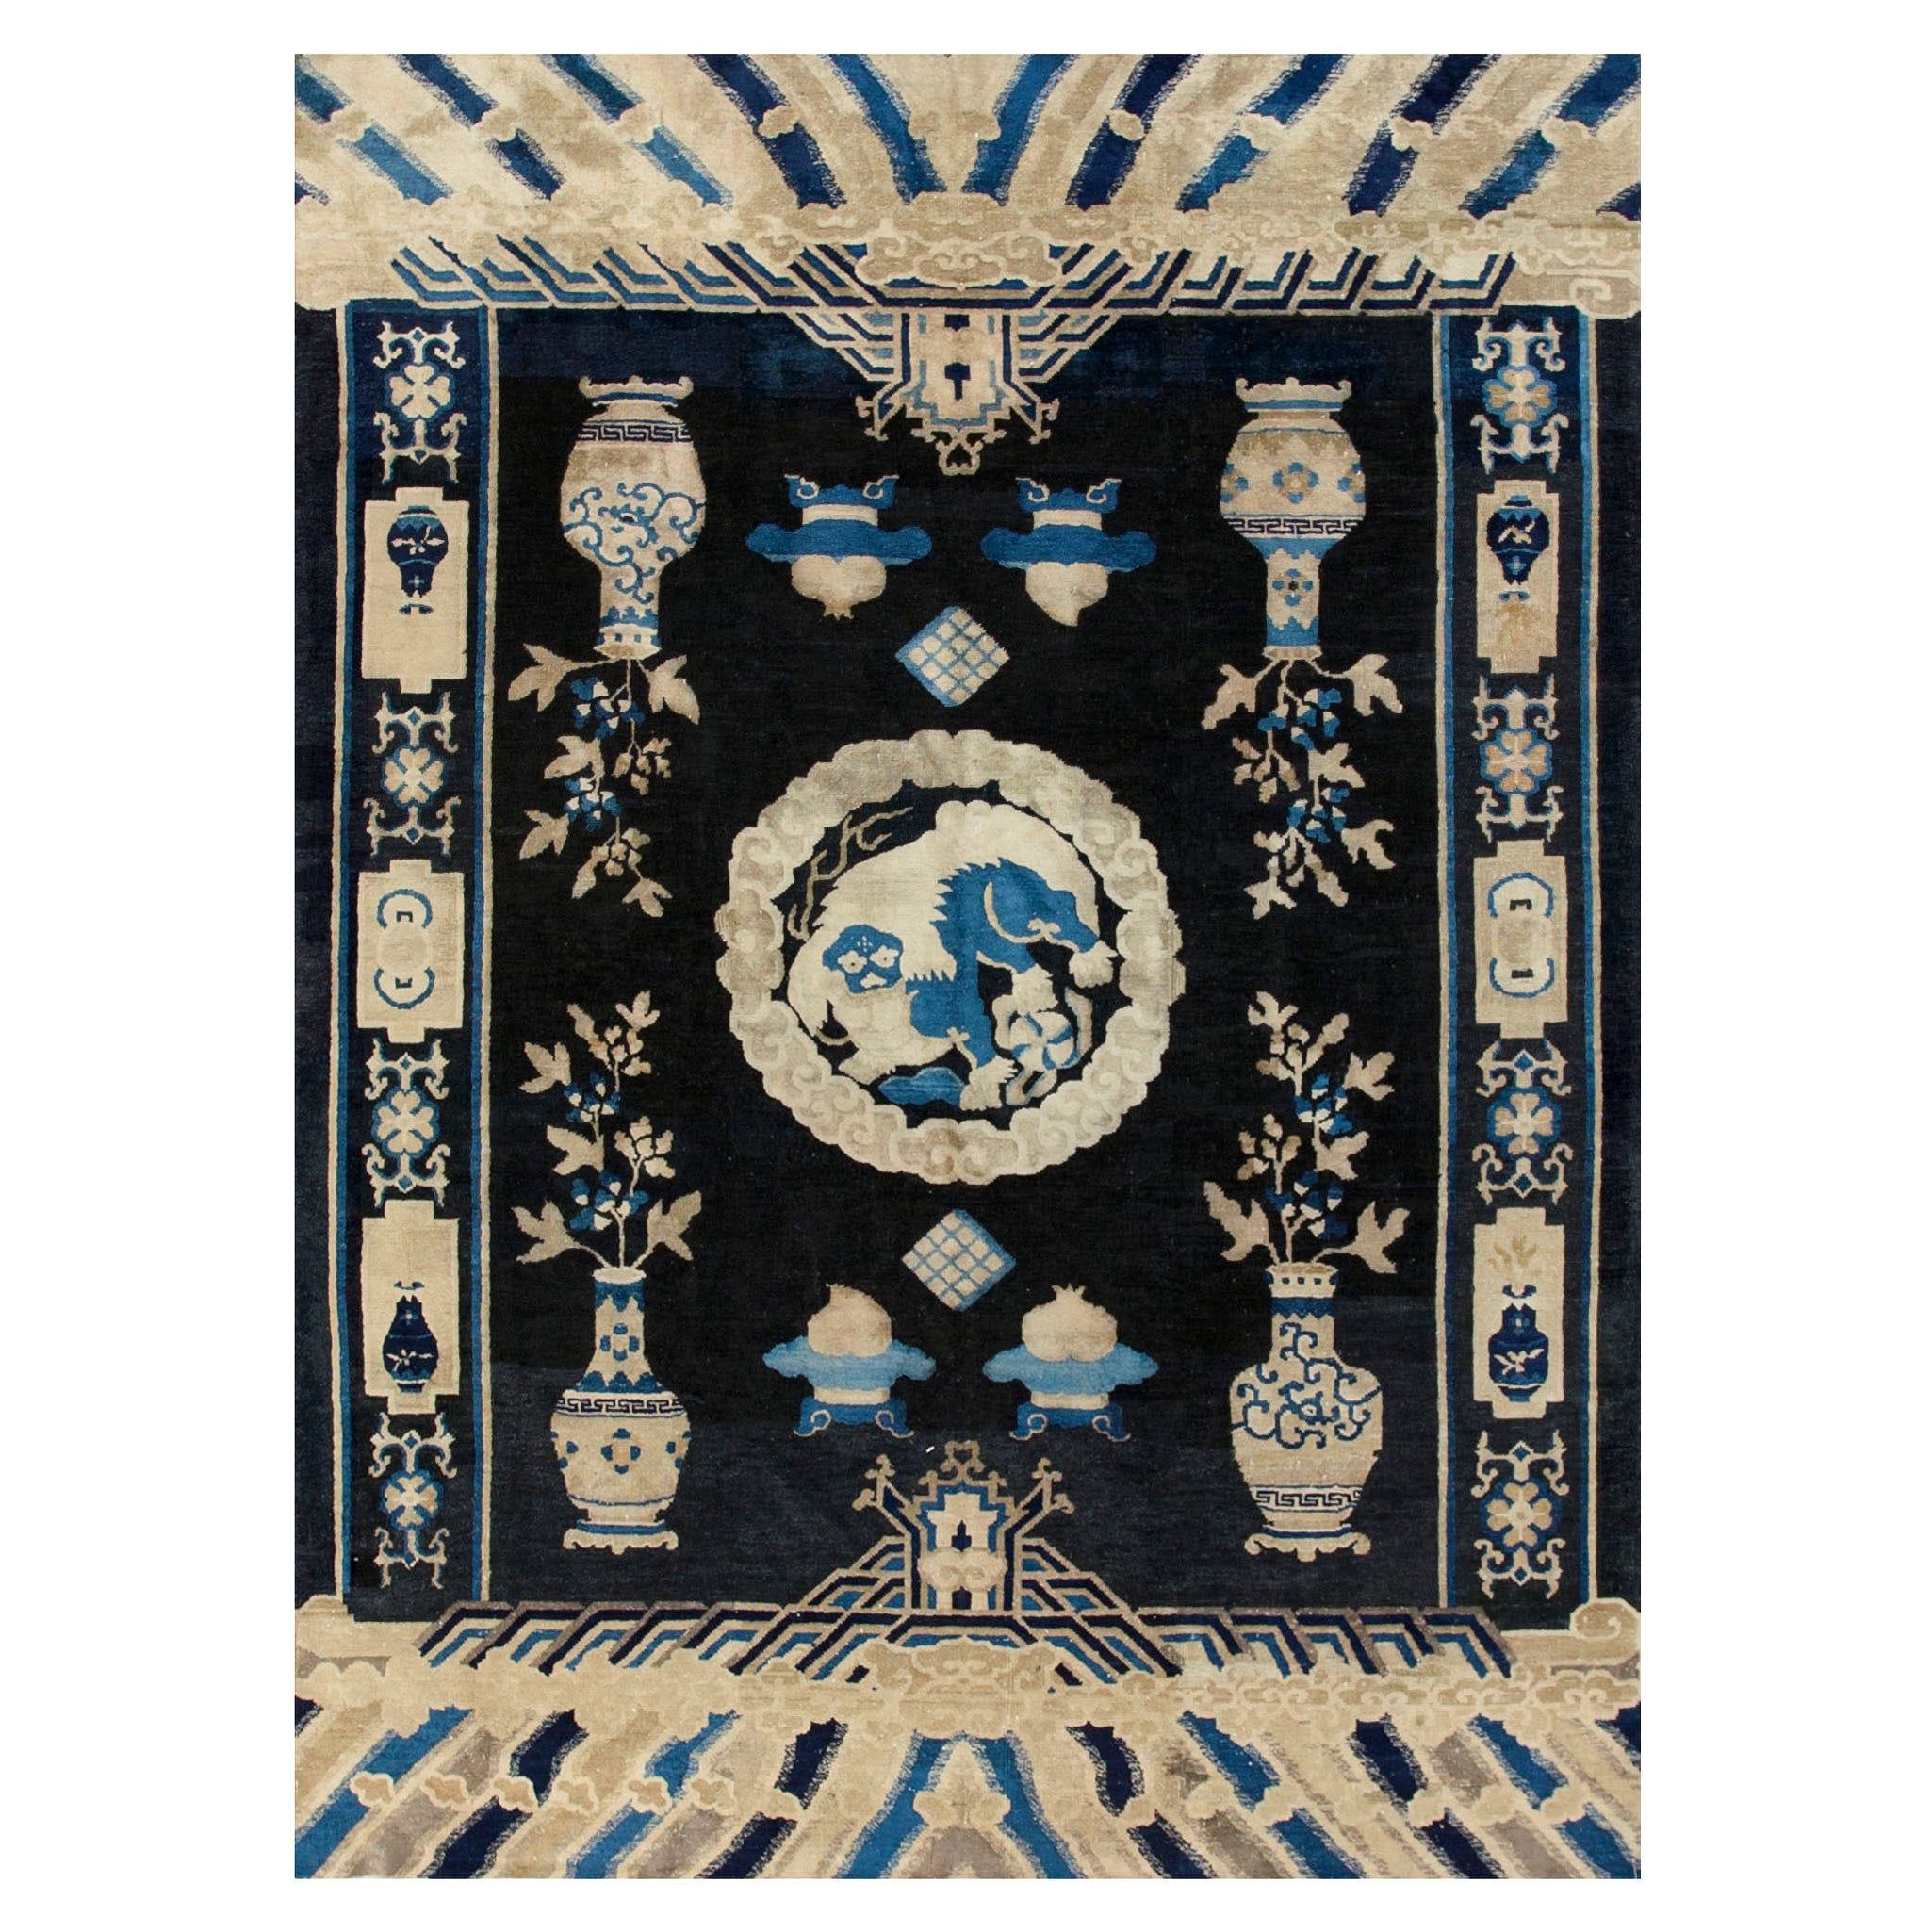 Antique Chinese Ningxia Carpet 6' 3" x 8' 6"